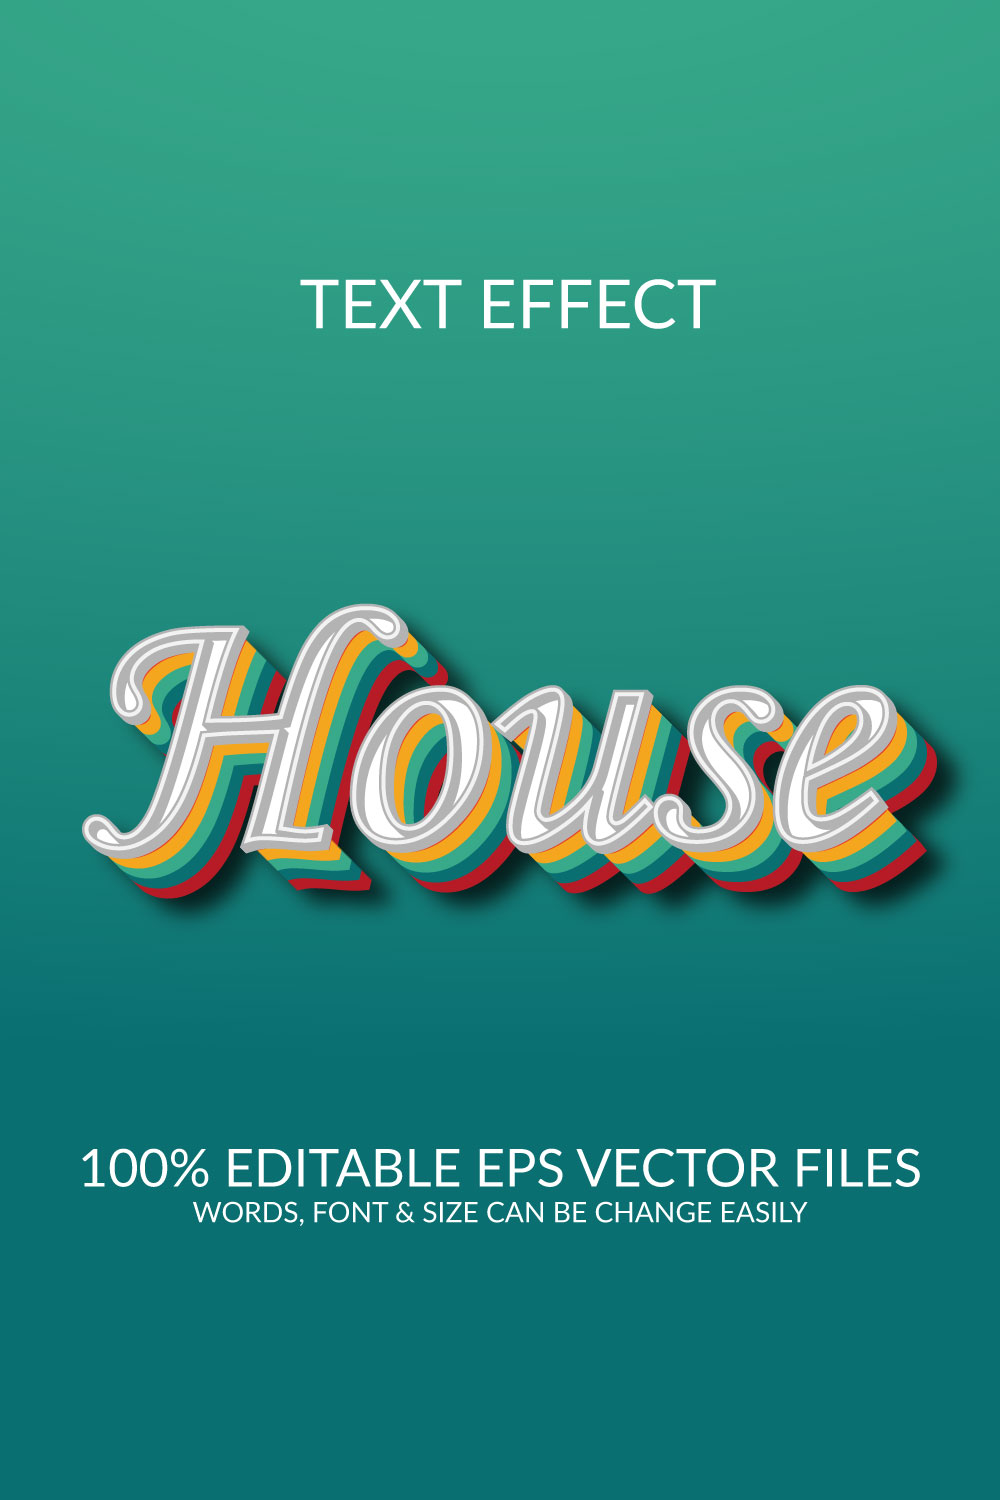 House 3d text effect template design pinterest preview image.